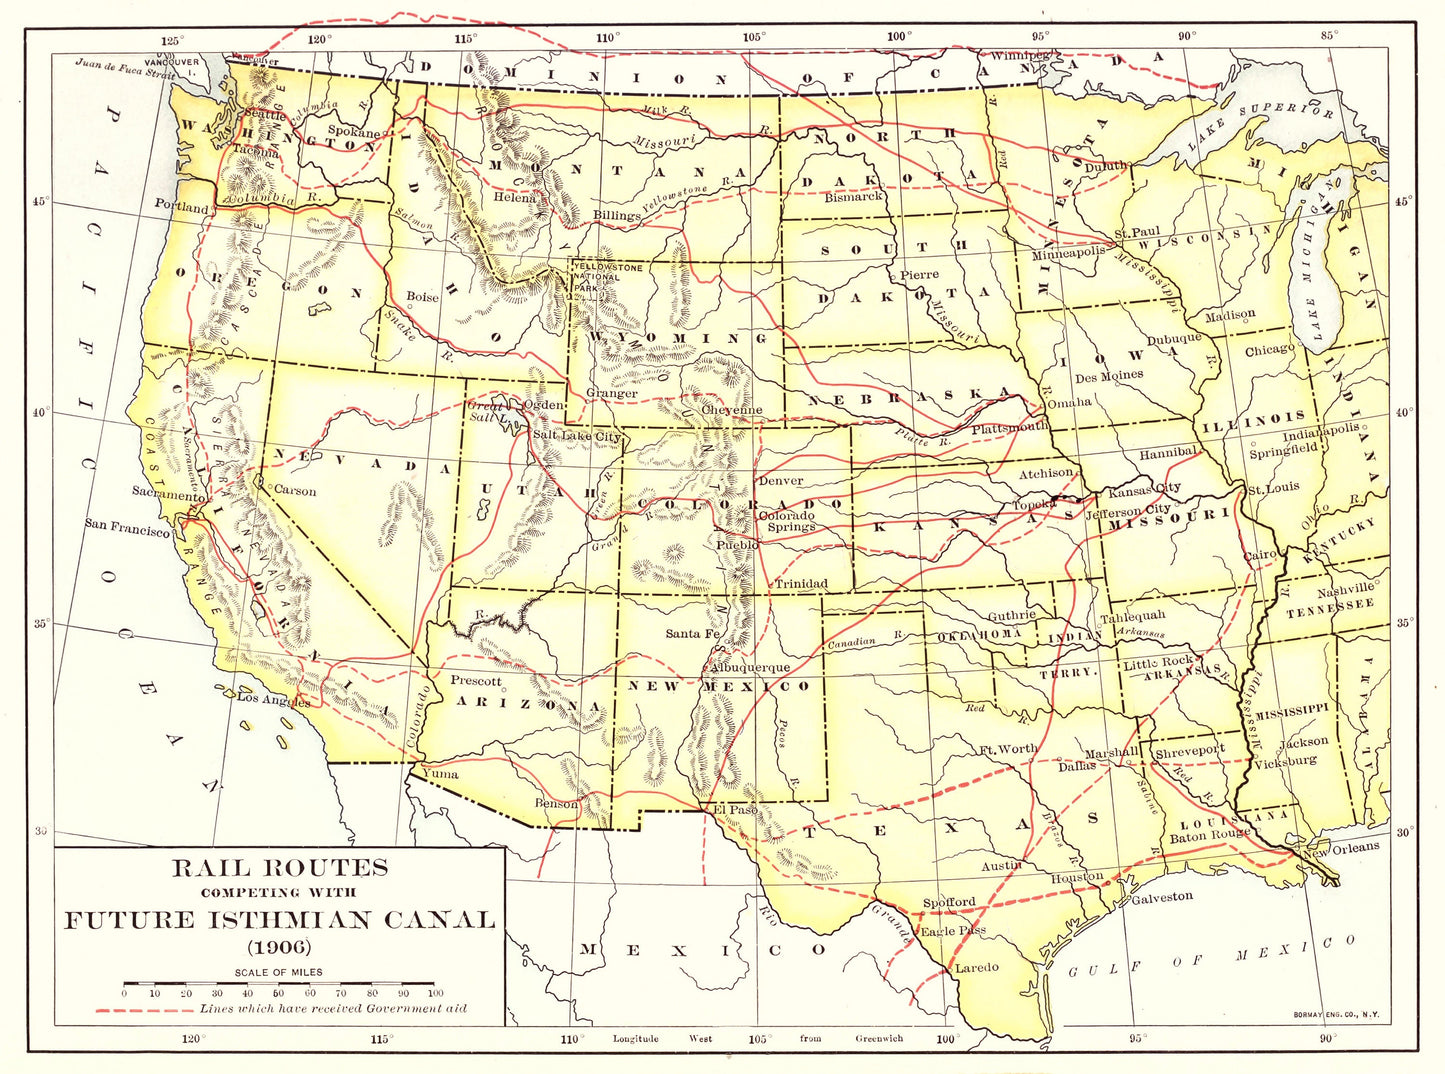 Harper's Atlas of American History Set 2 [37 Images]